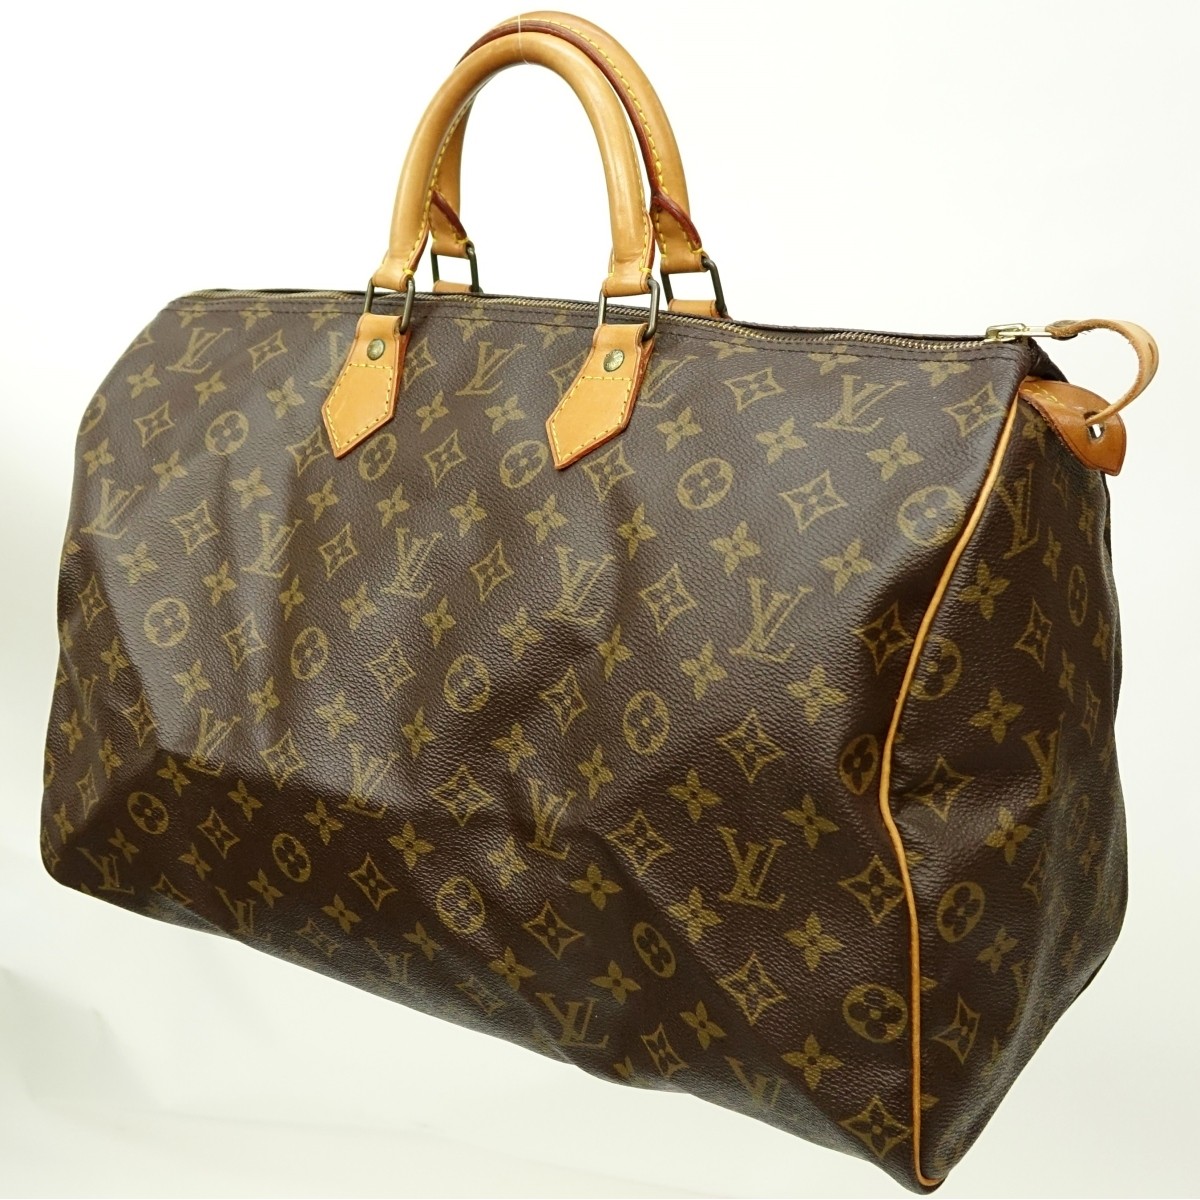 Pre-Owned LOUIS VUITTON Louis Vuitton Speedy 40 Handbag Monogram M41522  MB0950 (Good) 